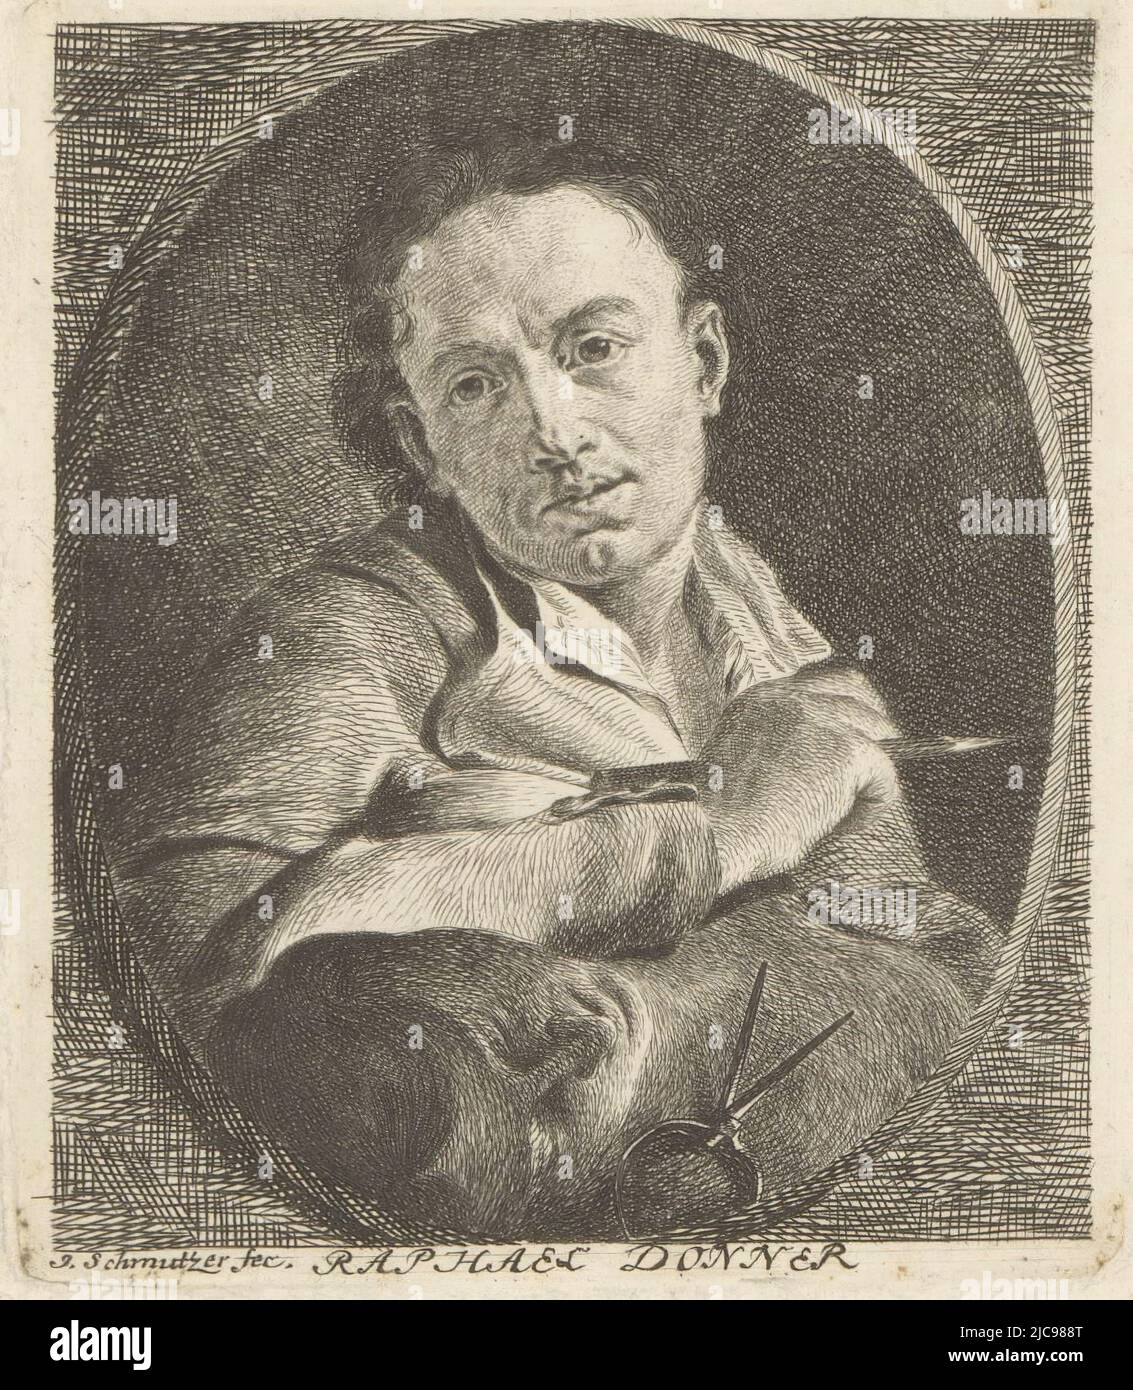 Portrait of George Raphael Johann Donner, print maker: Jakob Matthias Schmutzer, (mentioned on object), after: Paul Troger, 1743 - 1811, paper, etching, h 107 mm - w 92 mm Stock Photo